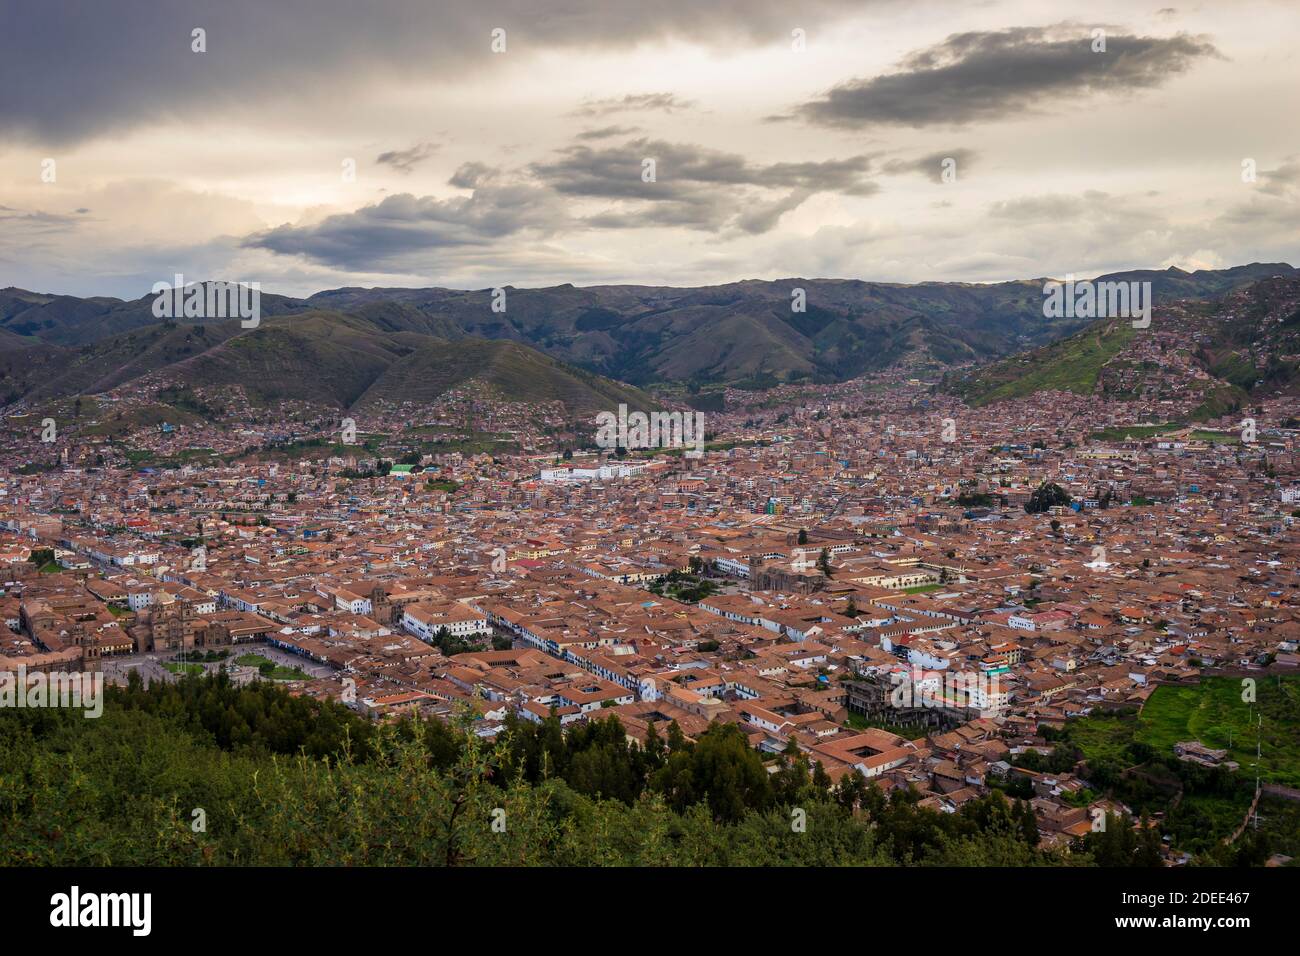 File:Sacsayhuamán, Cusco, Perú, 2015-07-31, DD 36.JPG - Wikimedia Commons